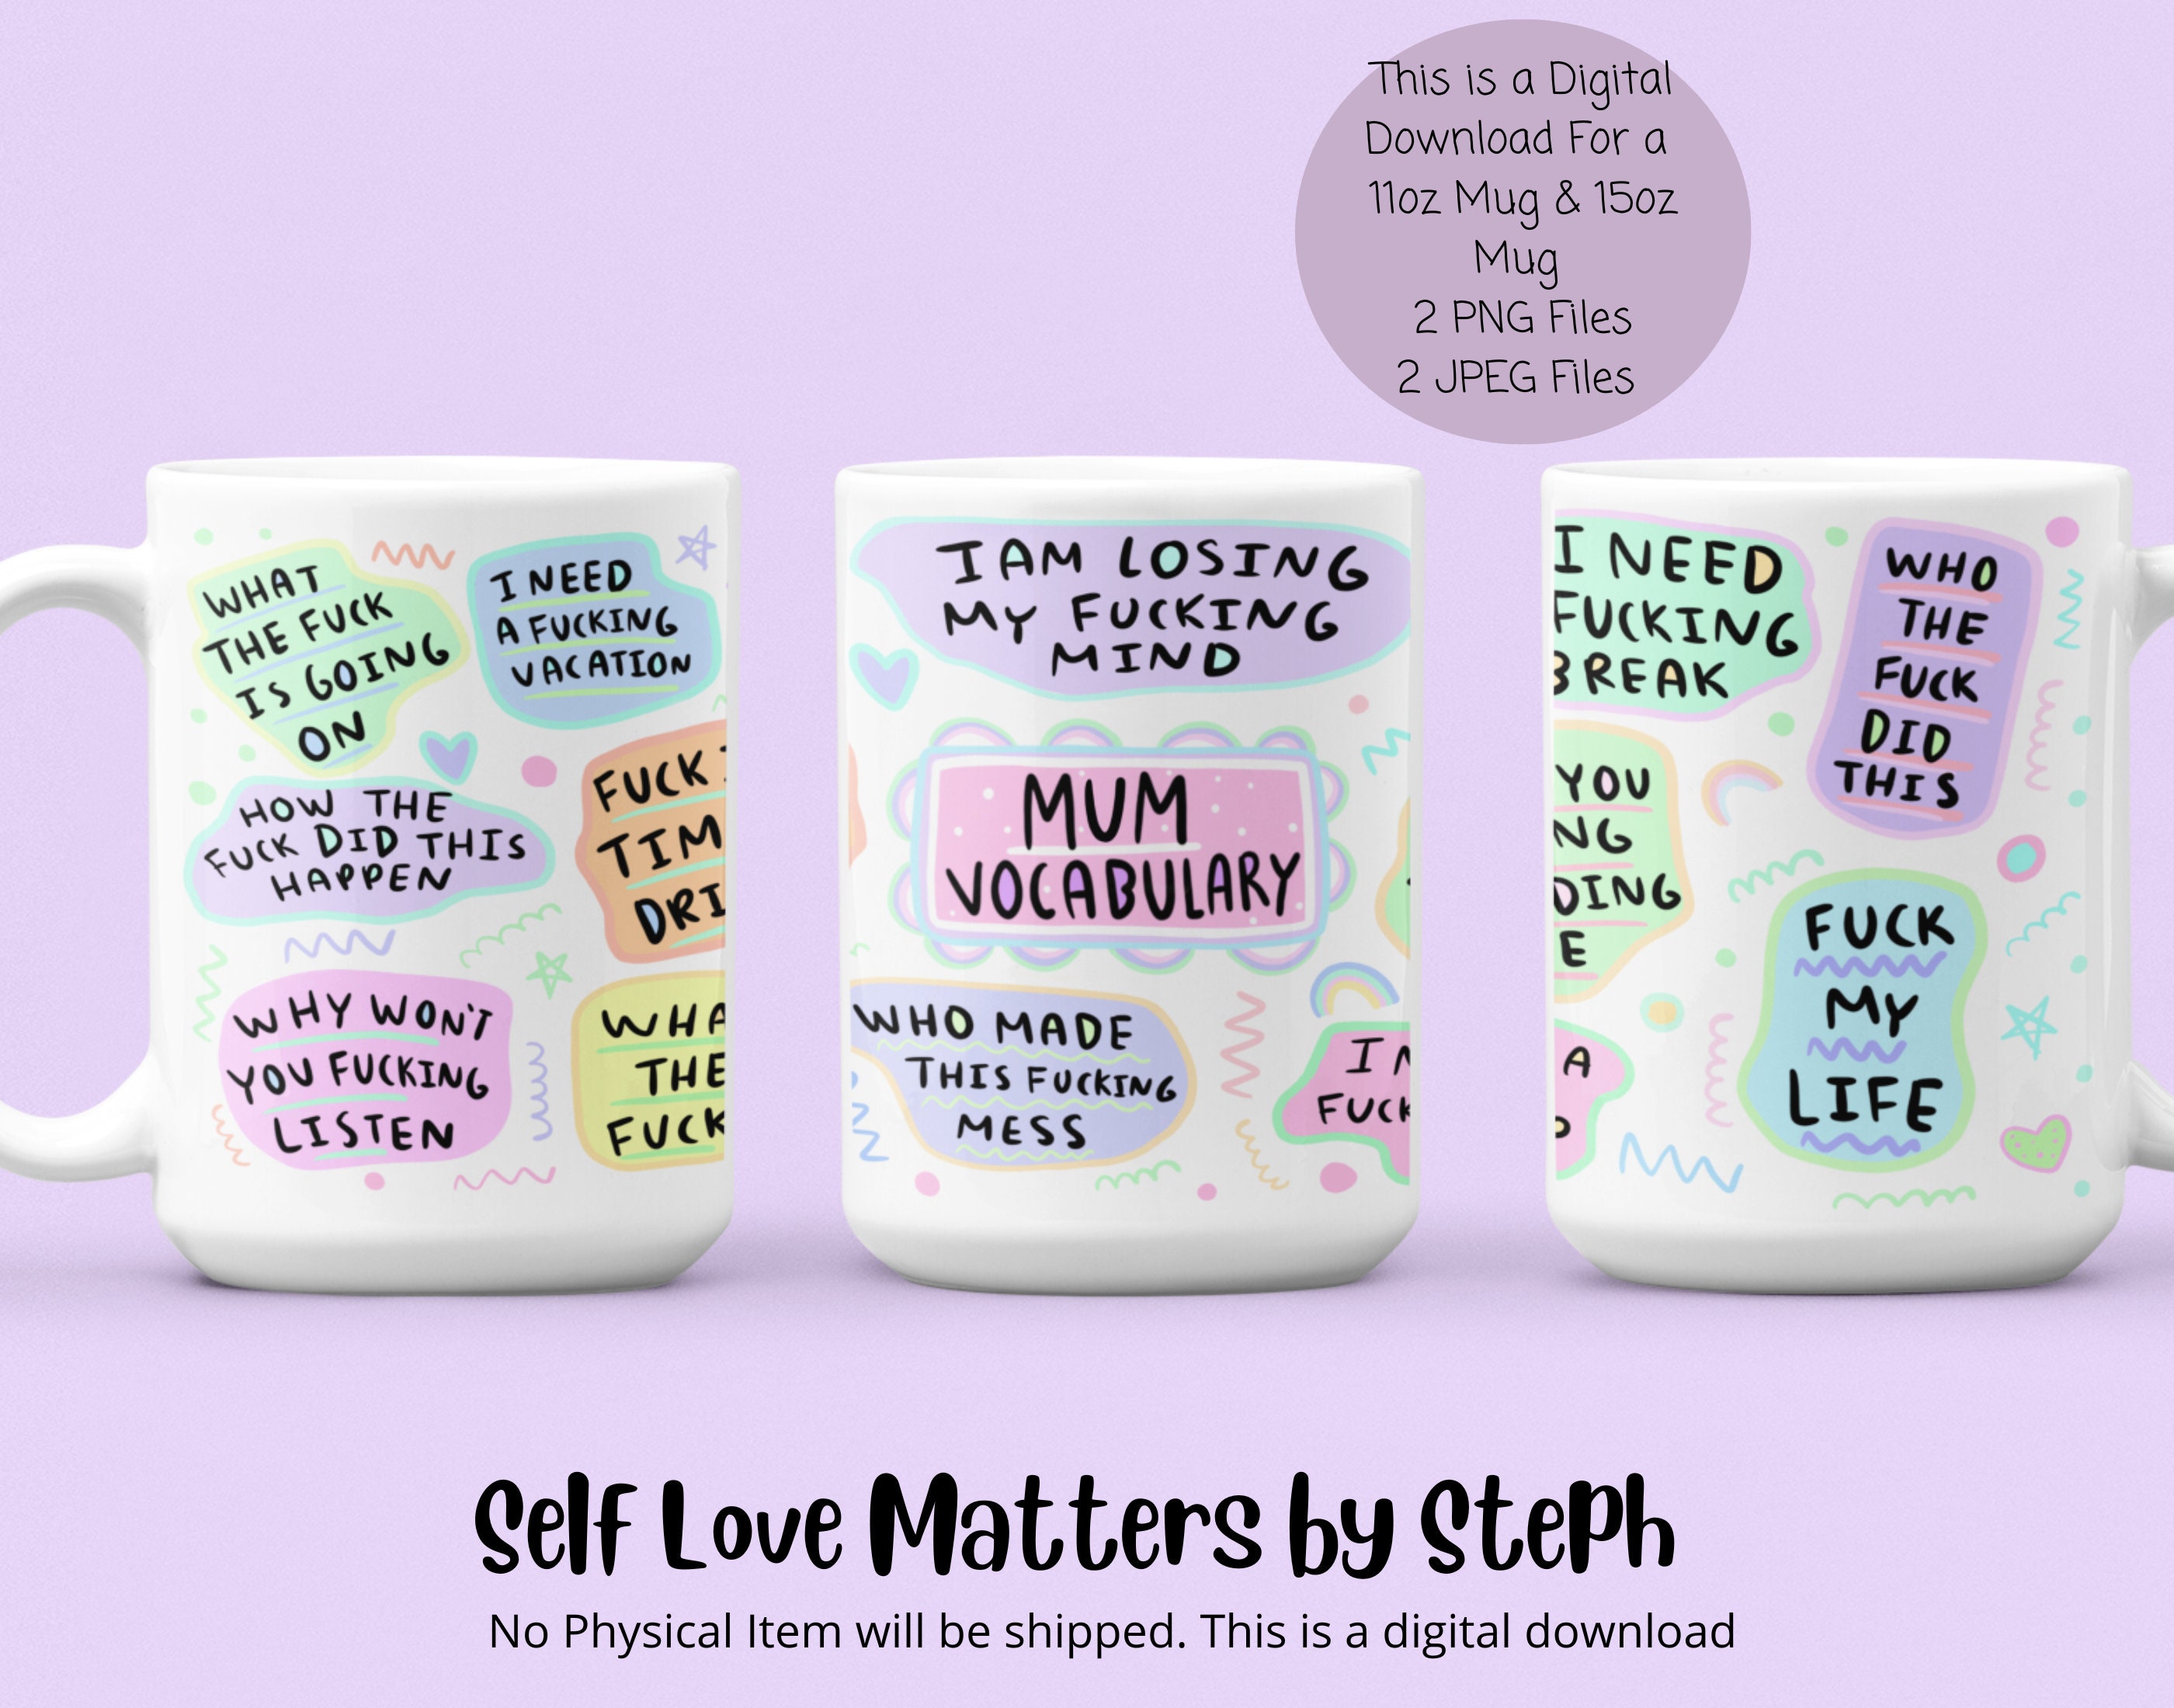 SUPER MOM 2 Mug Template – Digital Designs by Liby